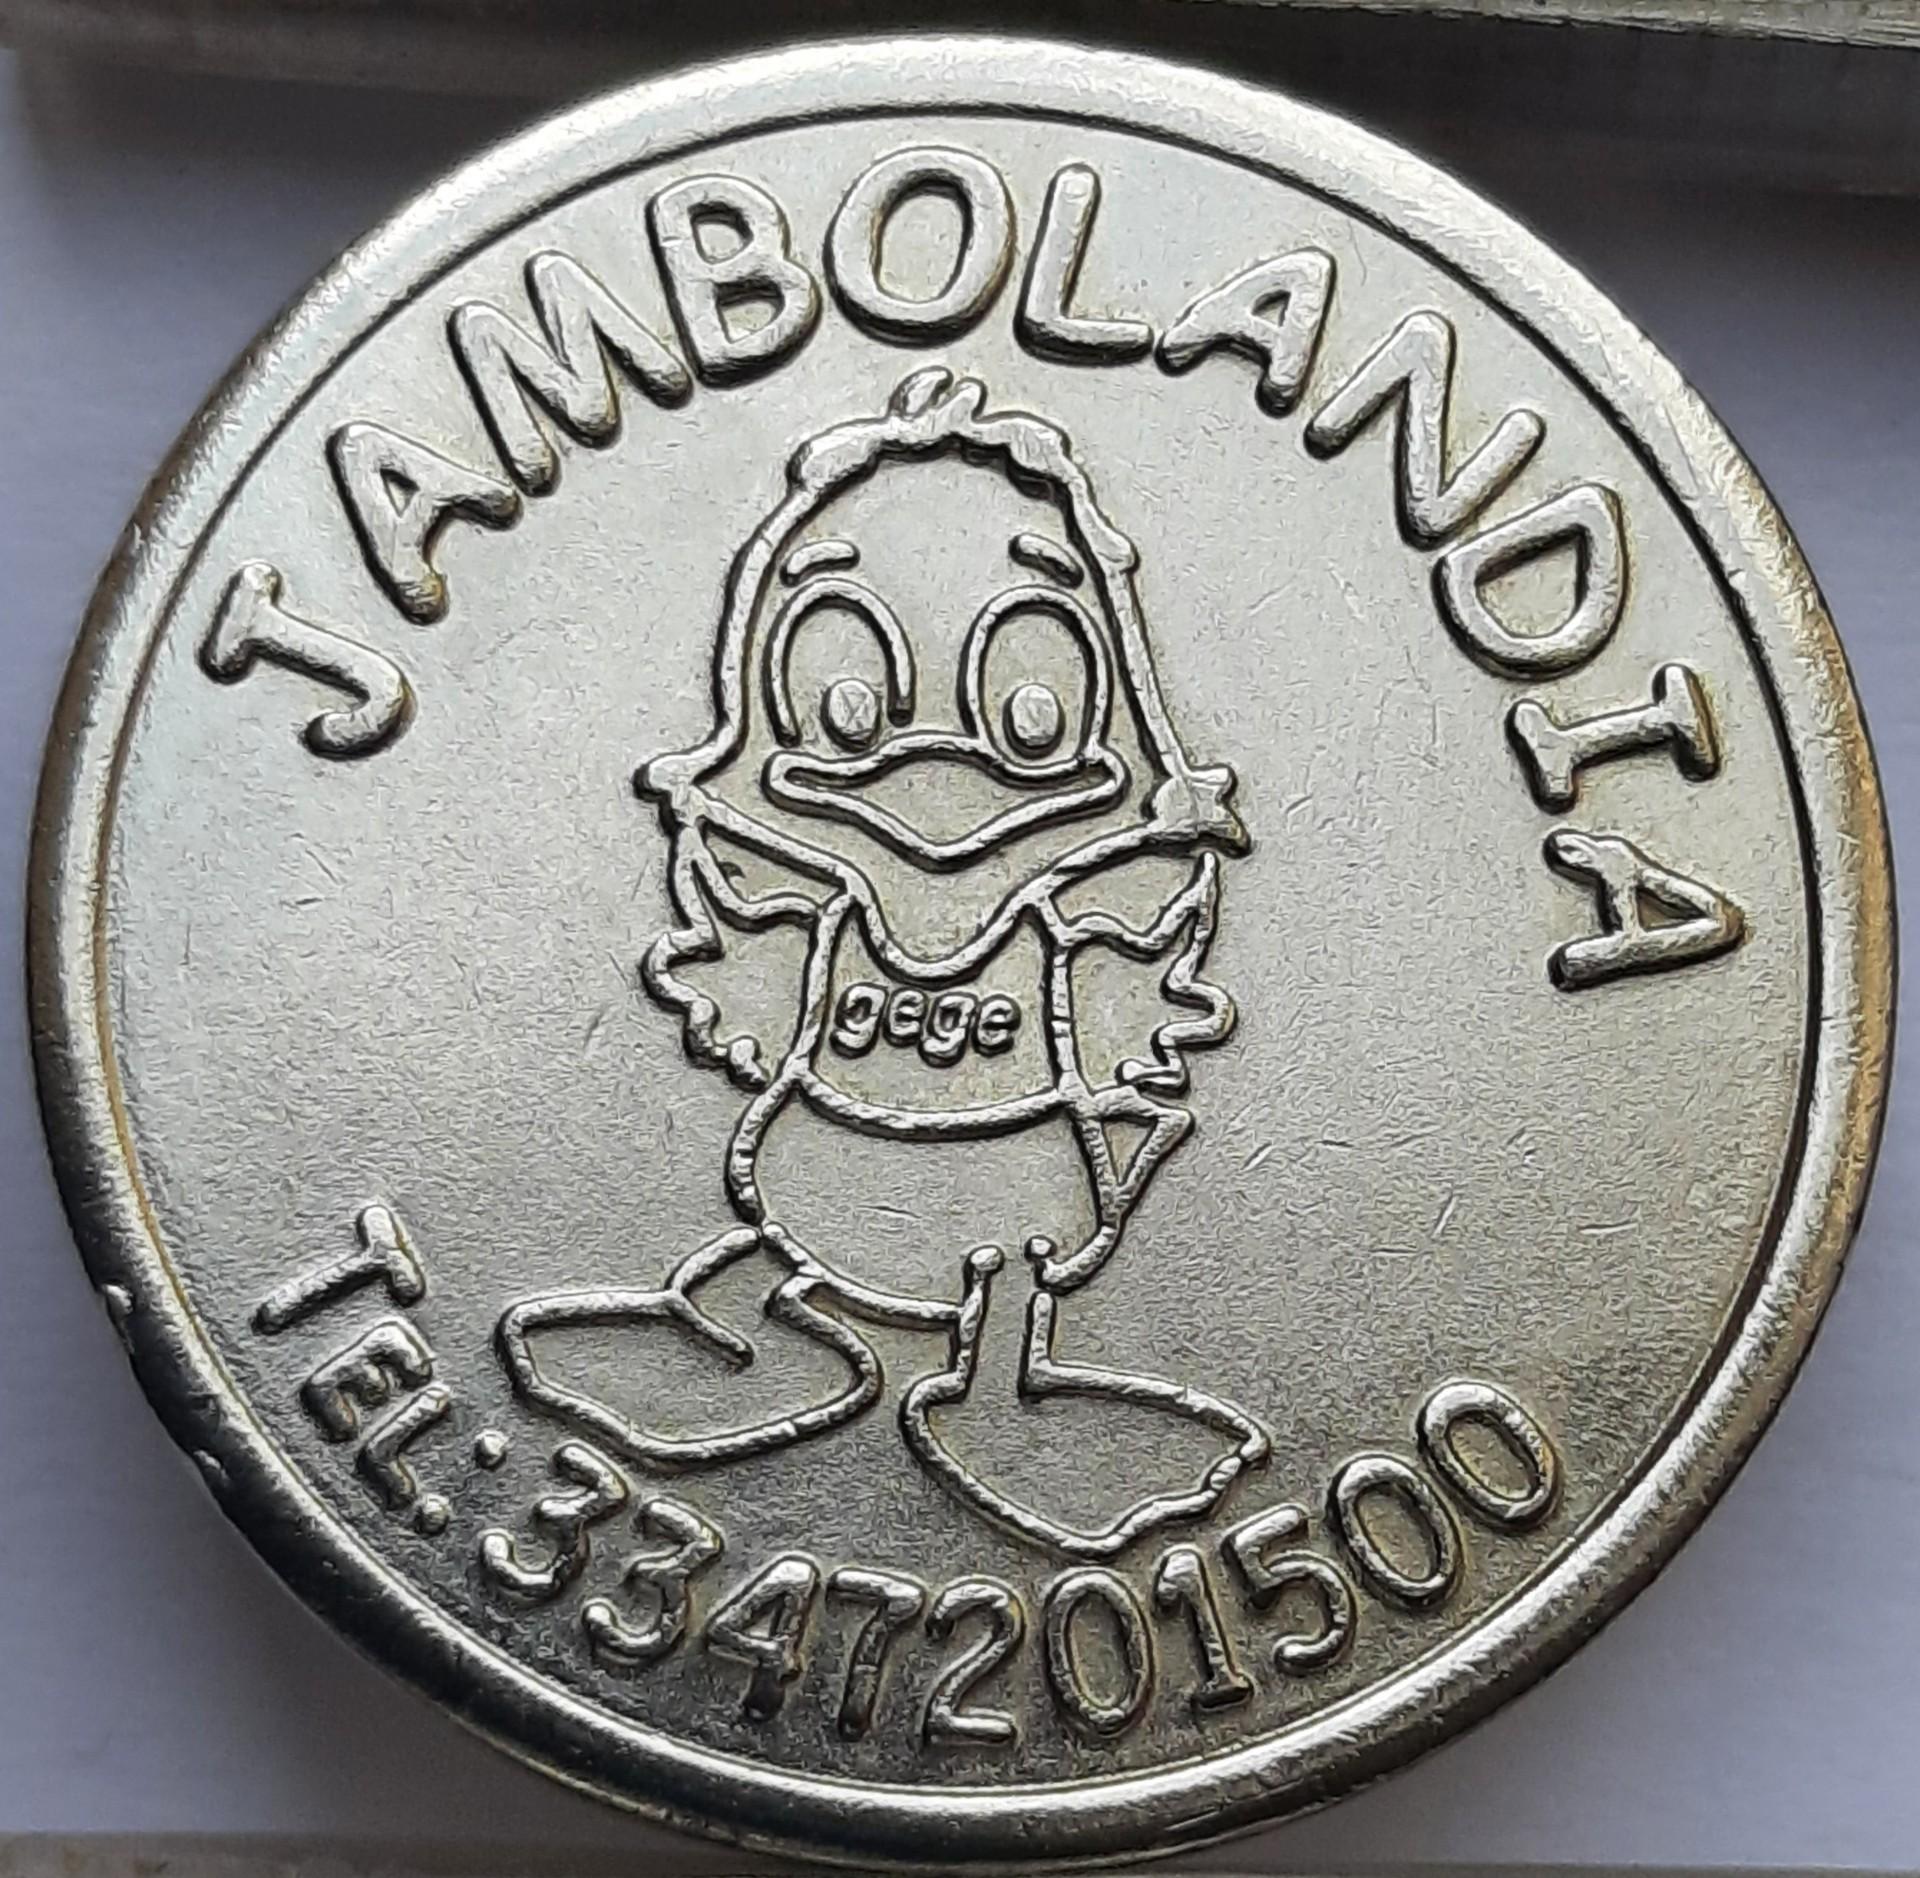 Italija tokenas Jambolandia N#326618 (A37)